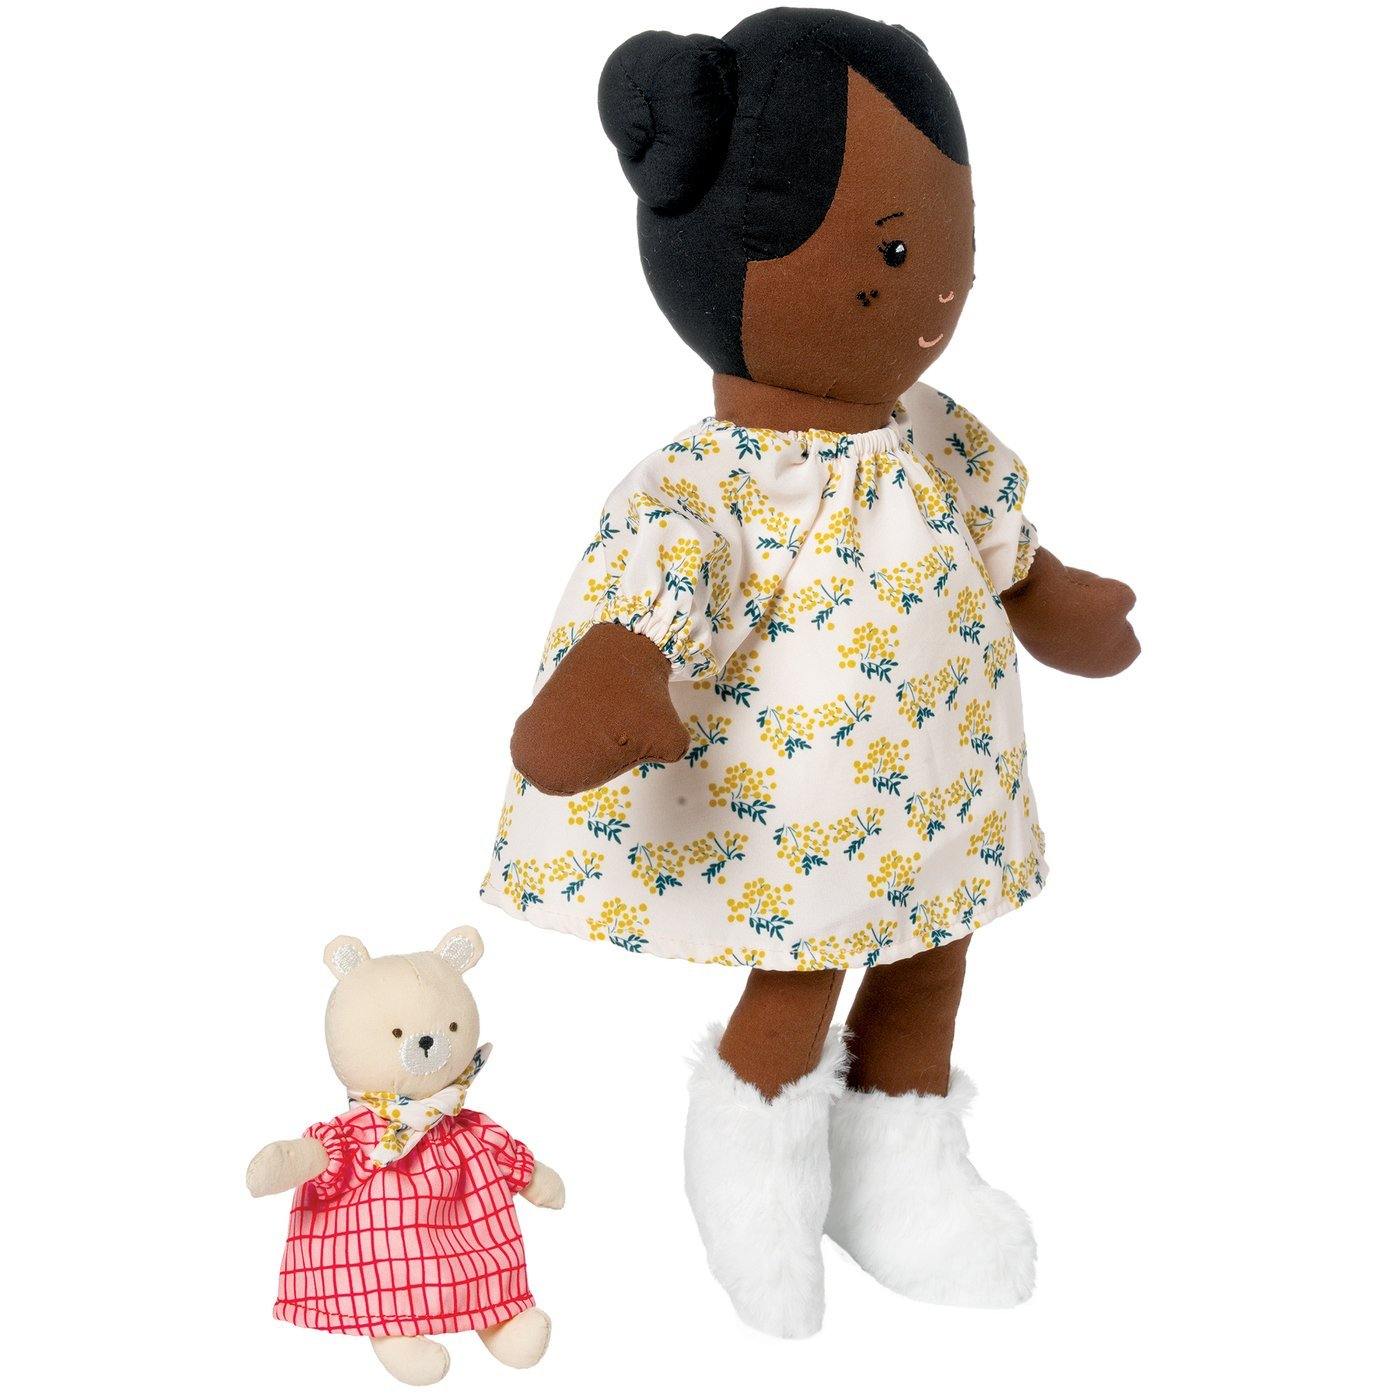 Manhattan Toy Company Playdate Friends Doll - Harper with Bear